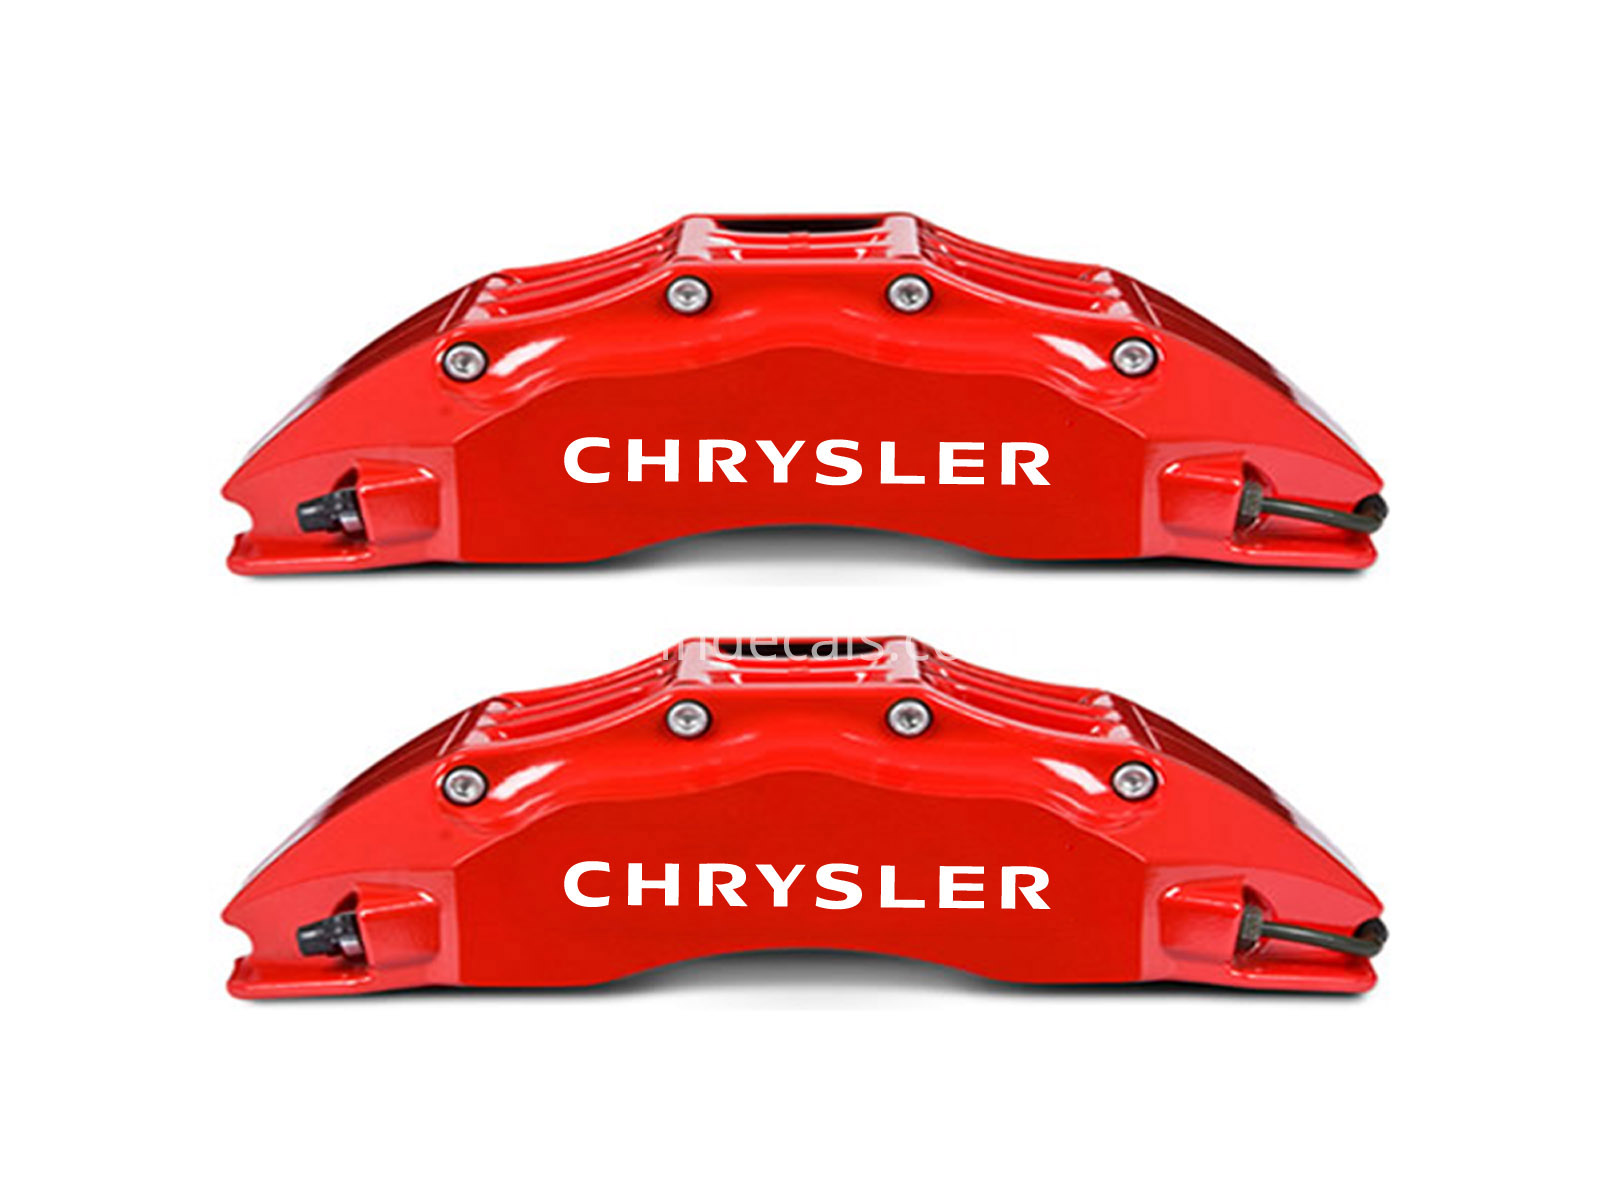 6 x Chrysler Stickers for Brakes - White